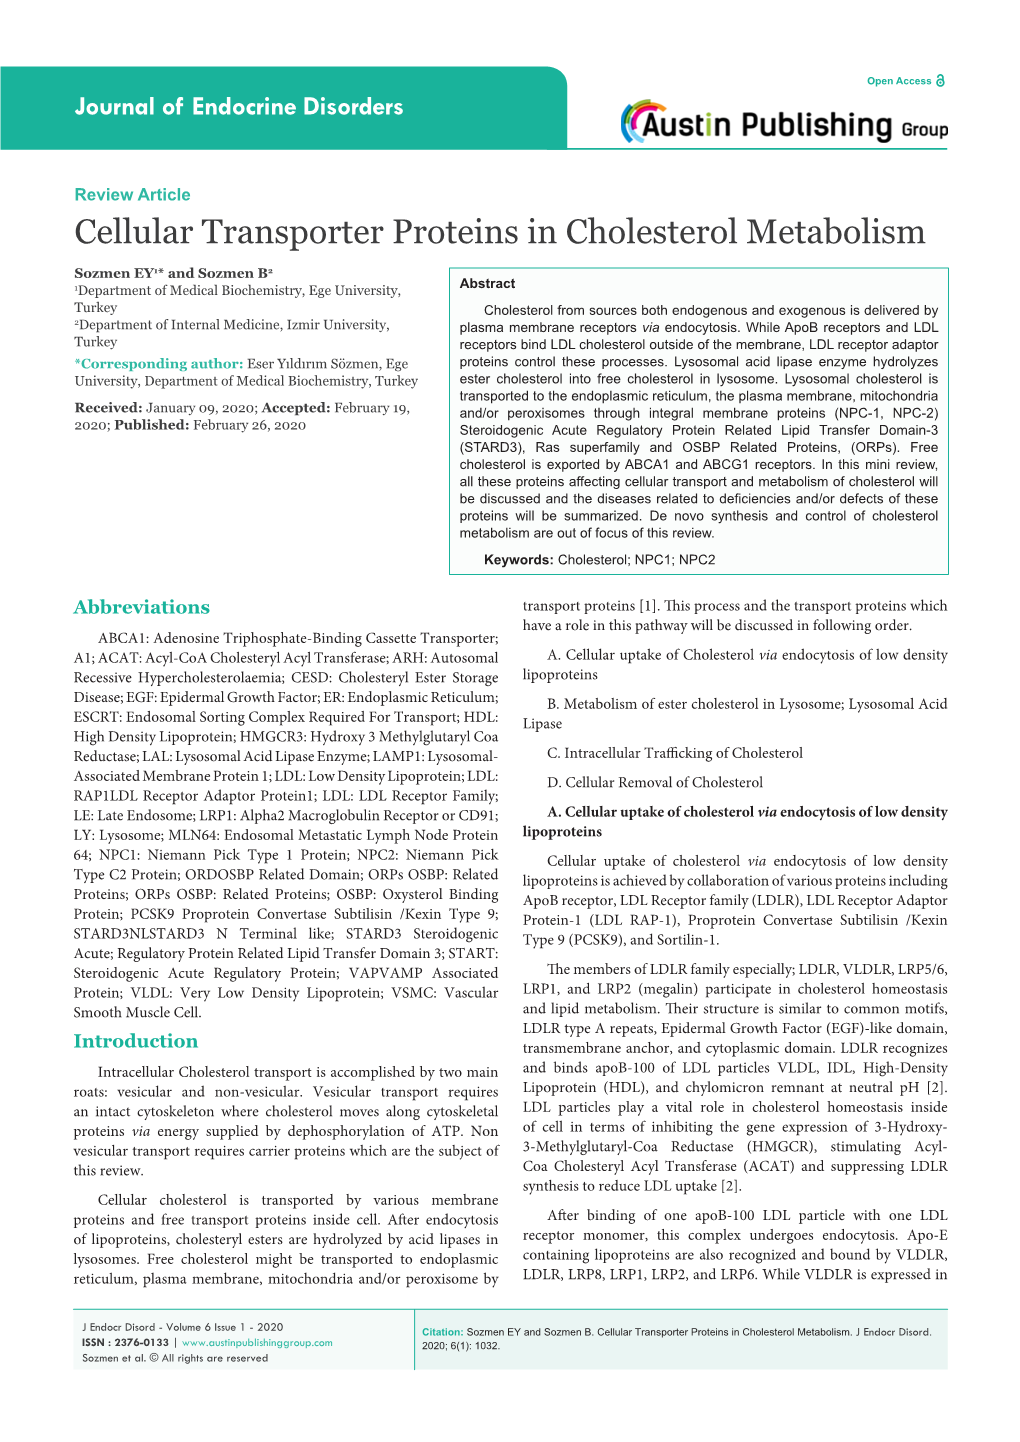 Cellular Transporter Proteins in Cholesterol Metabolism